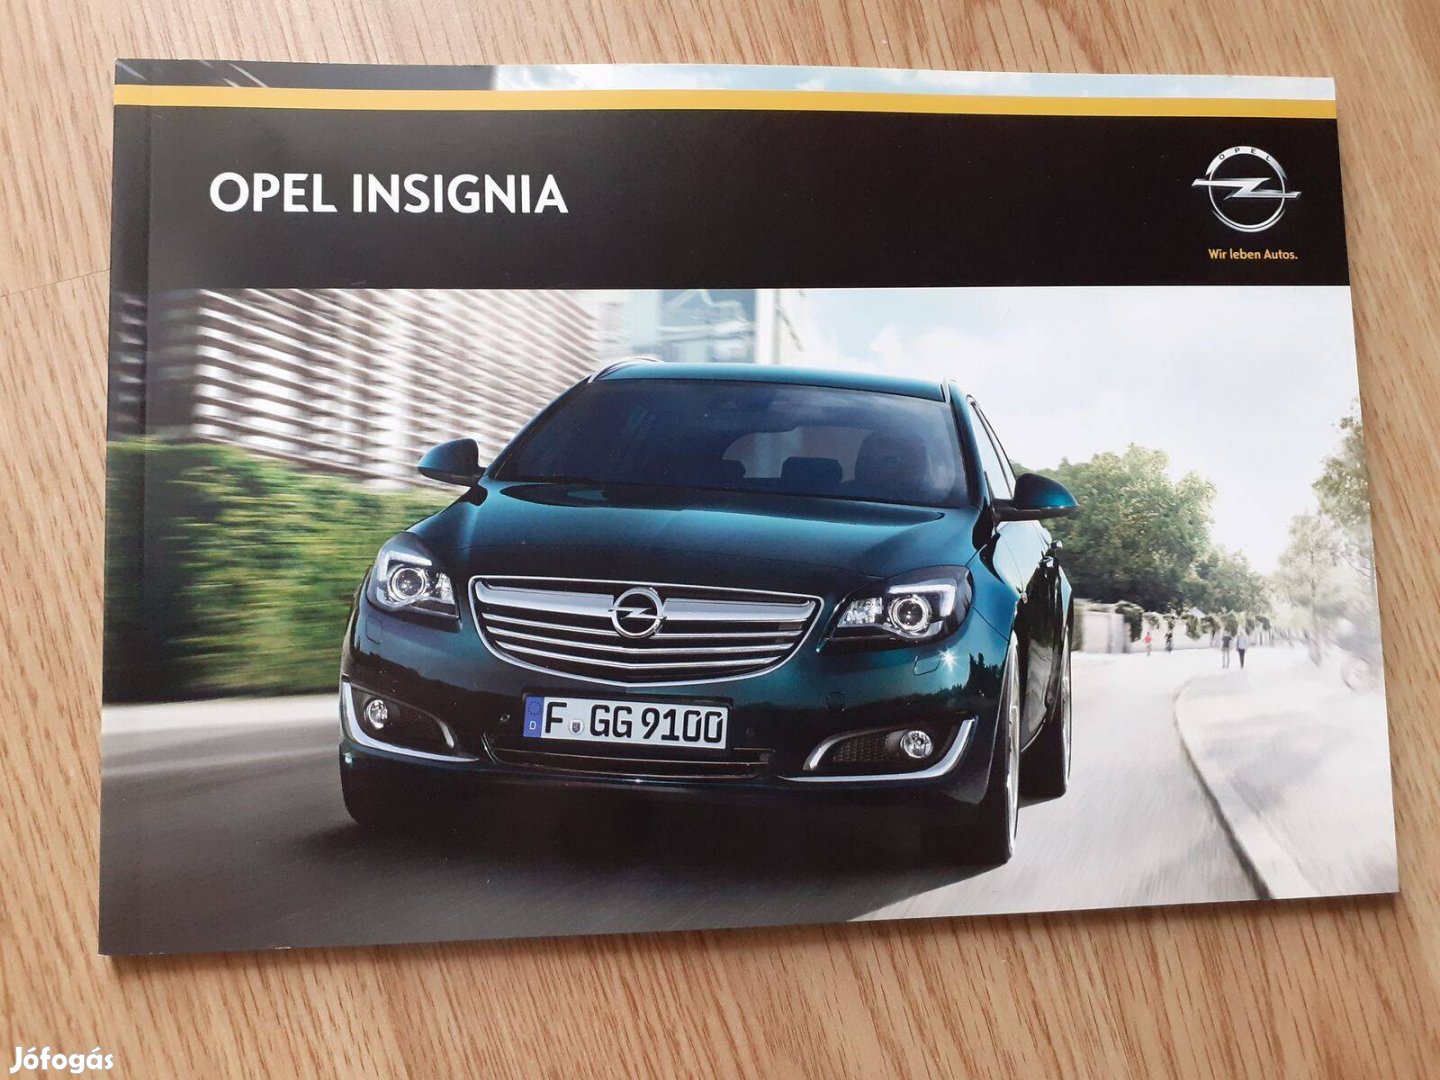 Opel Insignia prospektus - 2014, magyar nyelvű